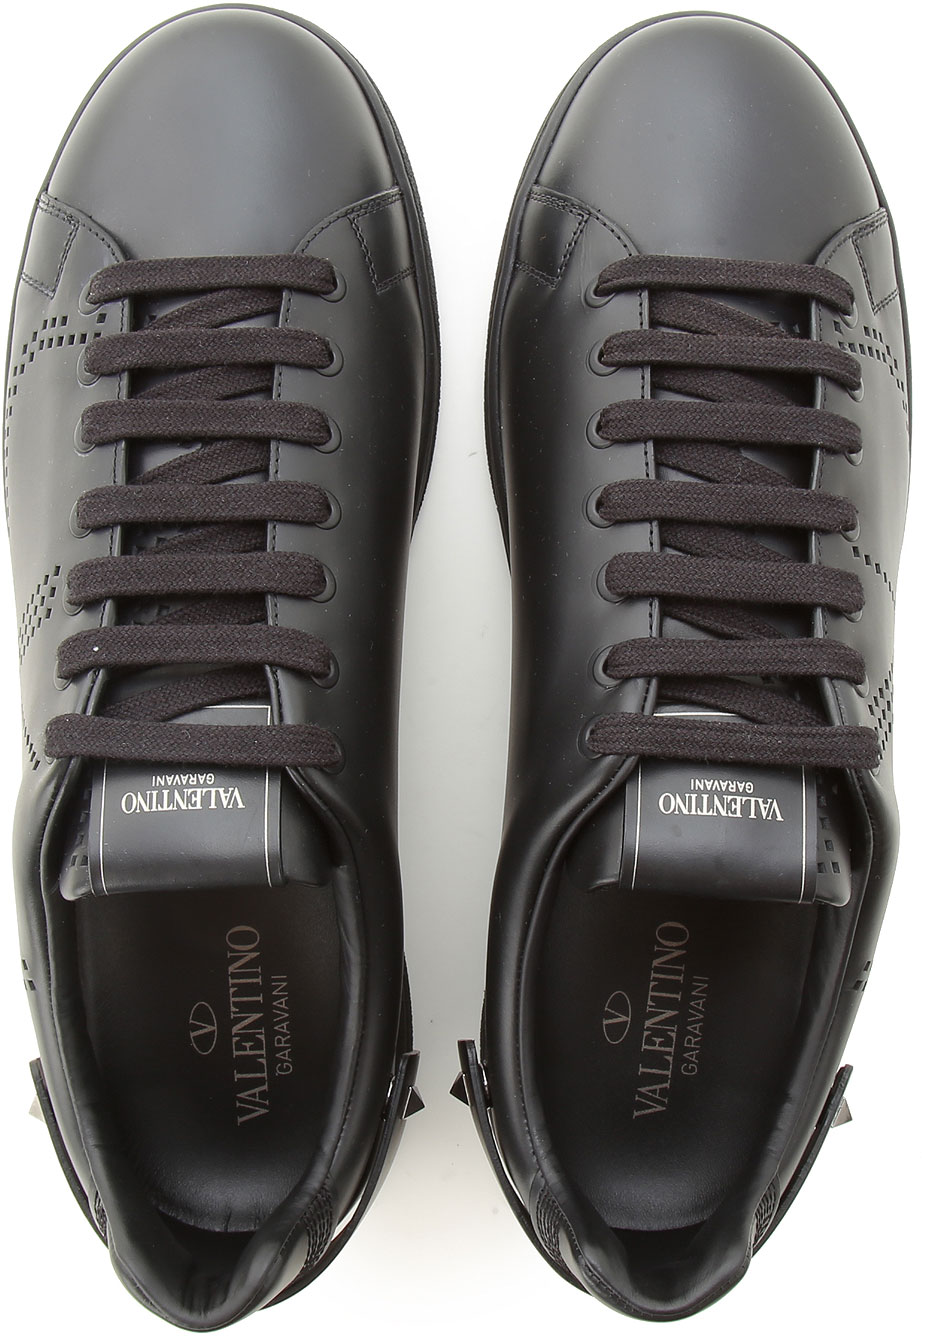 Mens Shoes Valentino Garavani, Style code: uy2s0c04-mmk-0n0